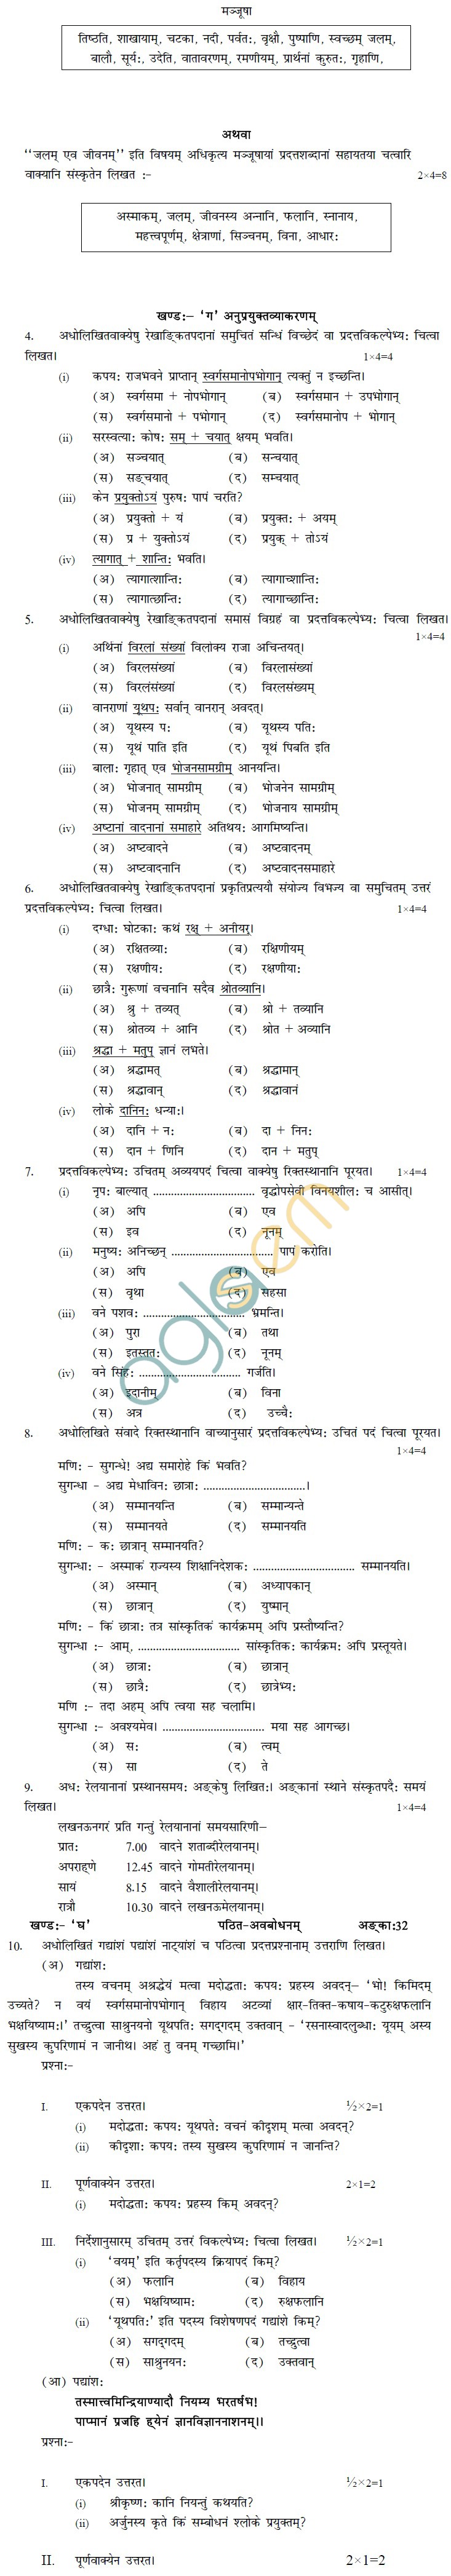 CBSE Board Exam 2013 Sample Papers (SA1) Class X - Sanskrit